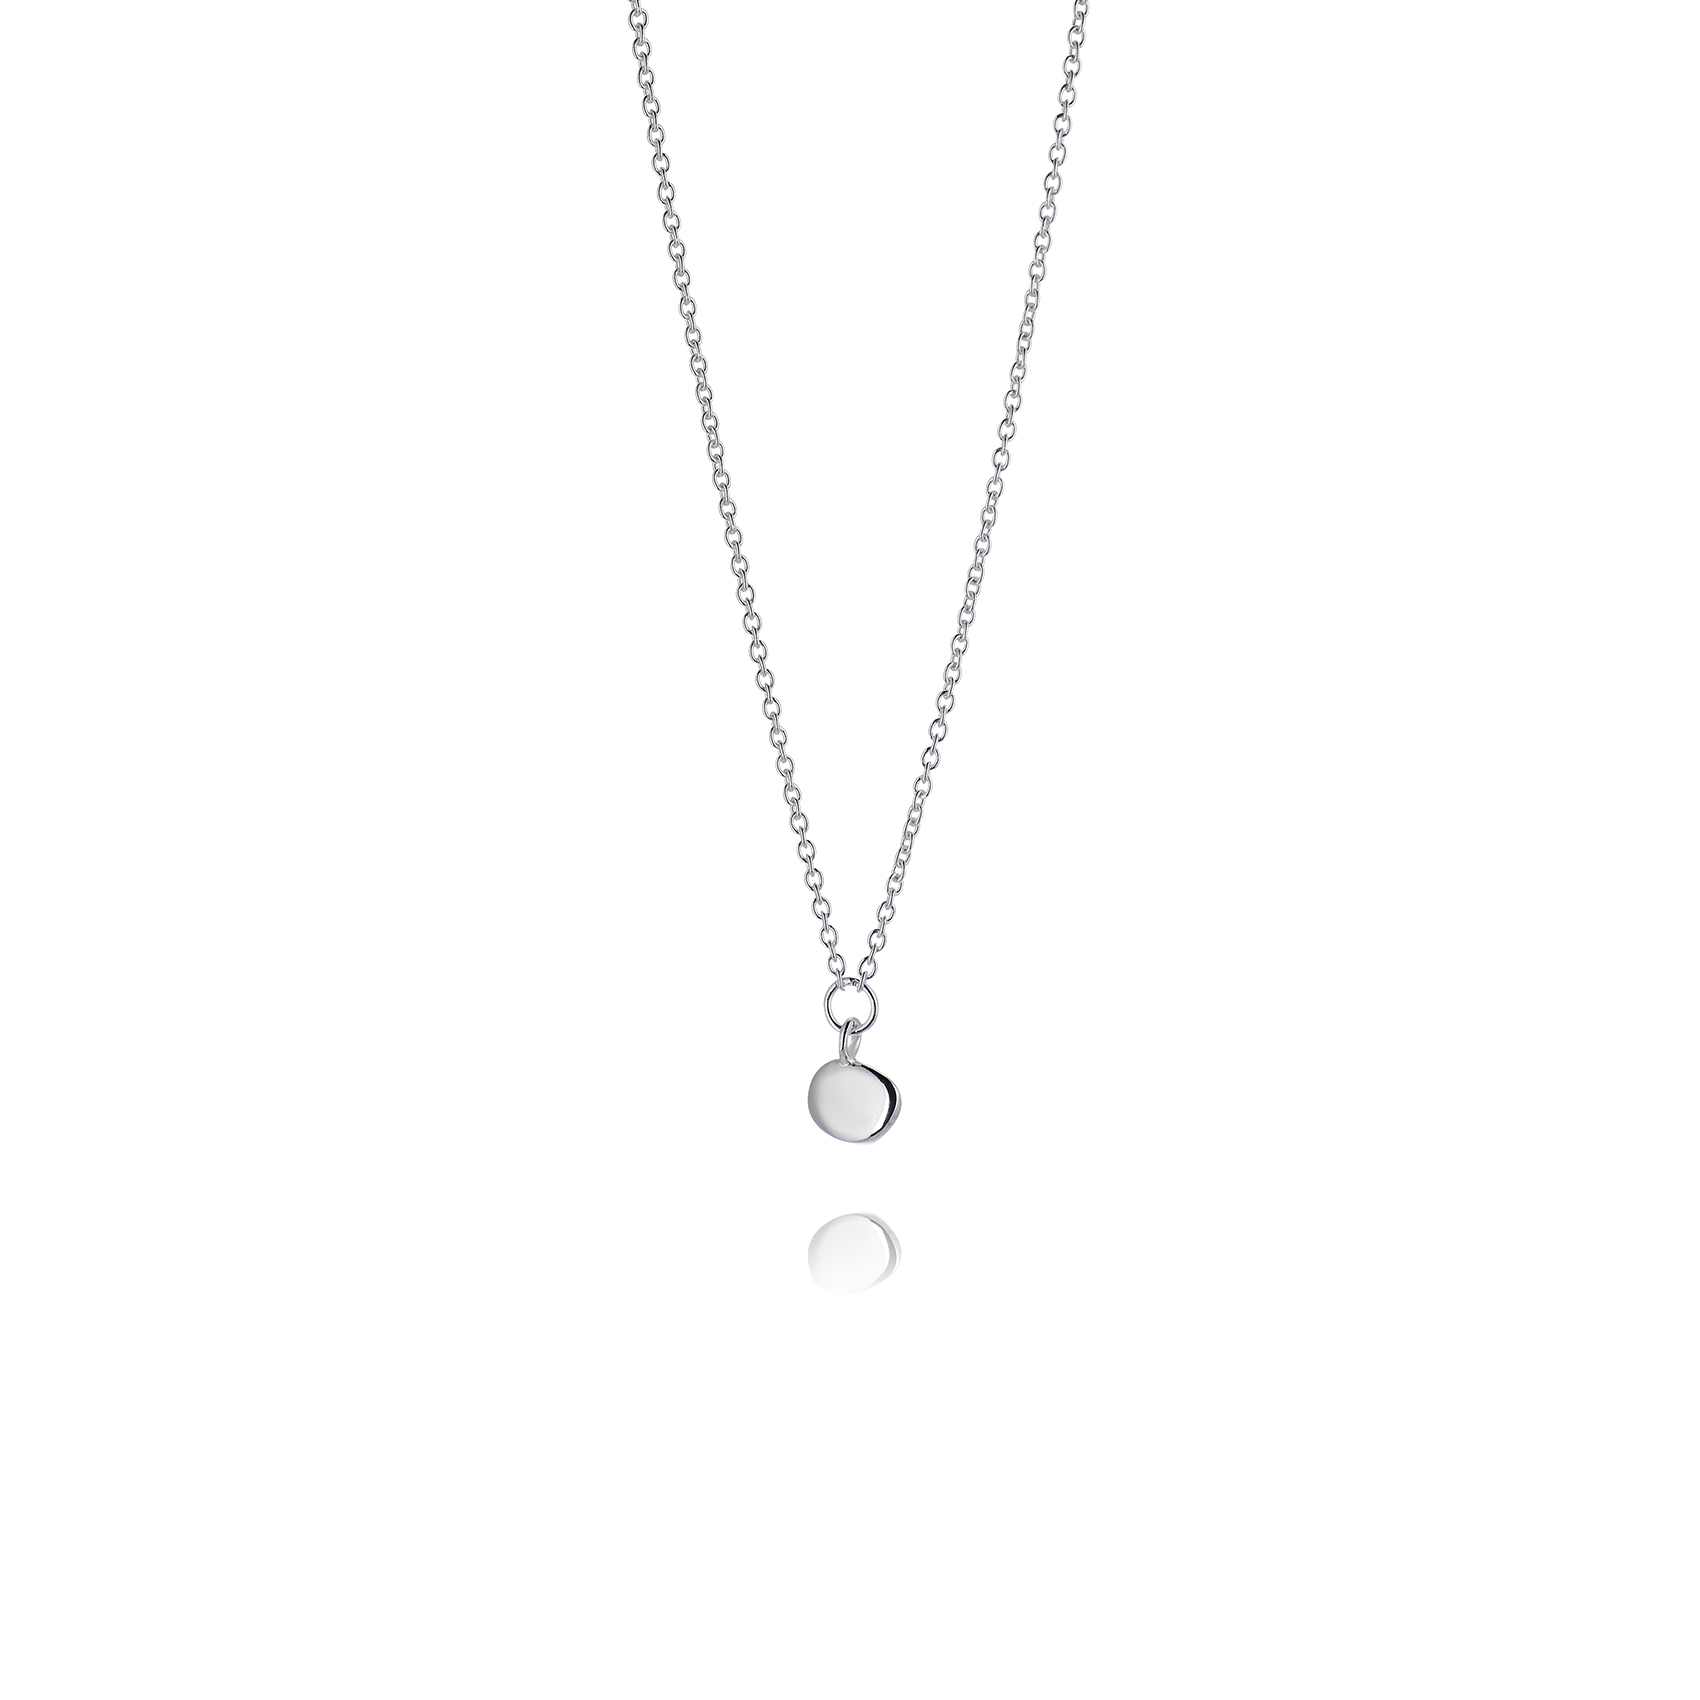 Morning dew drop necklace